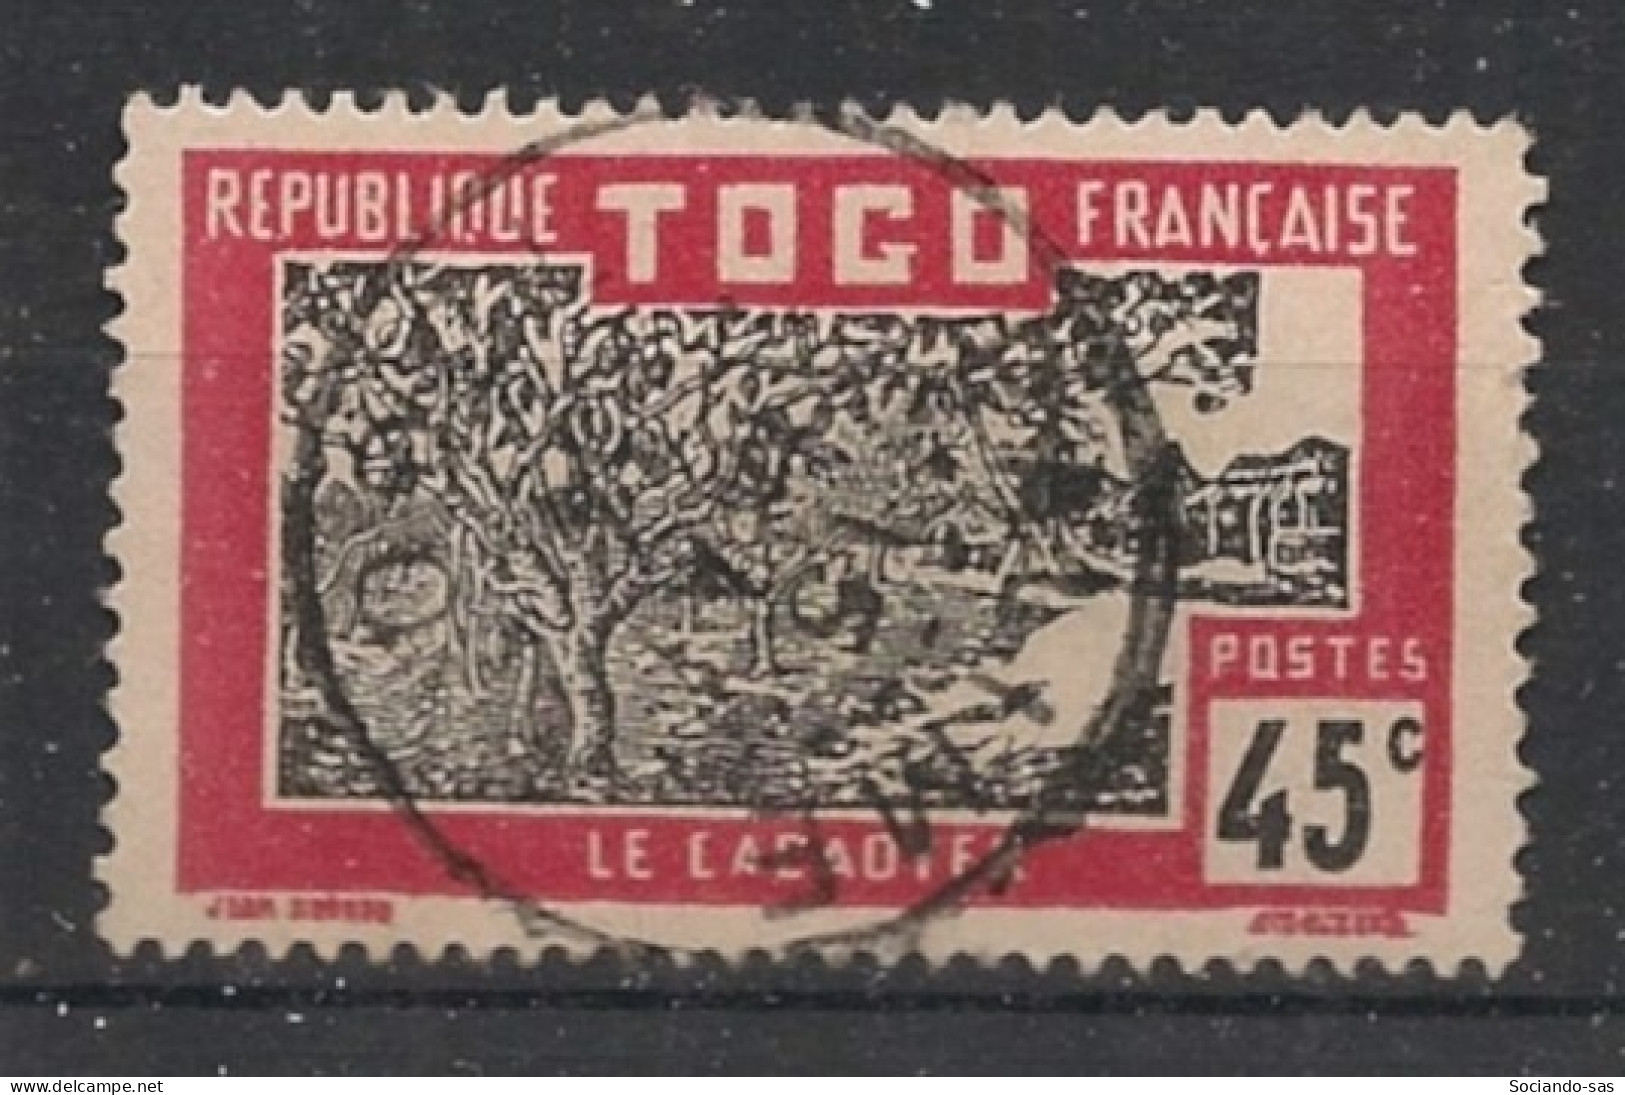 TOGO - 1924 - N°YT. 135 - Cacaoyer 45c Rose-rouge - Oblitéré / Used - Usati